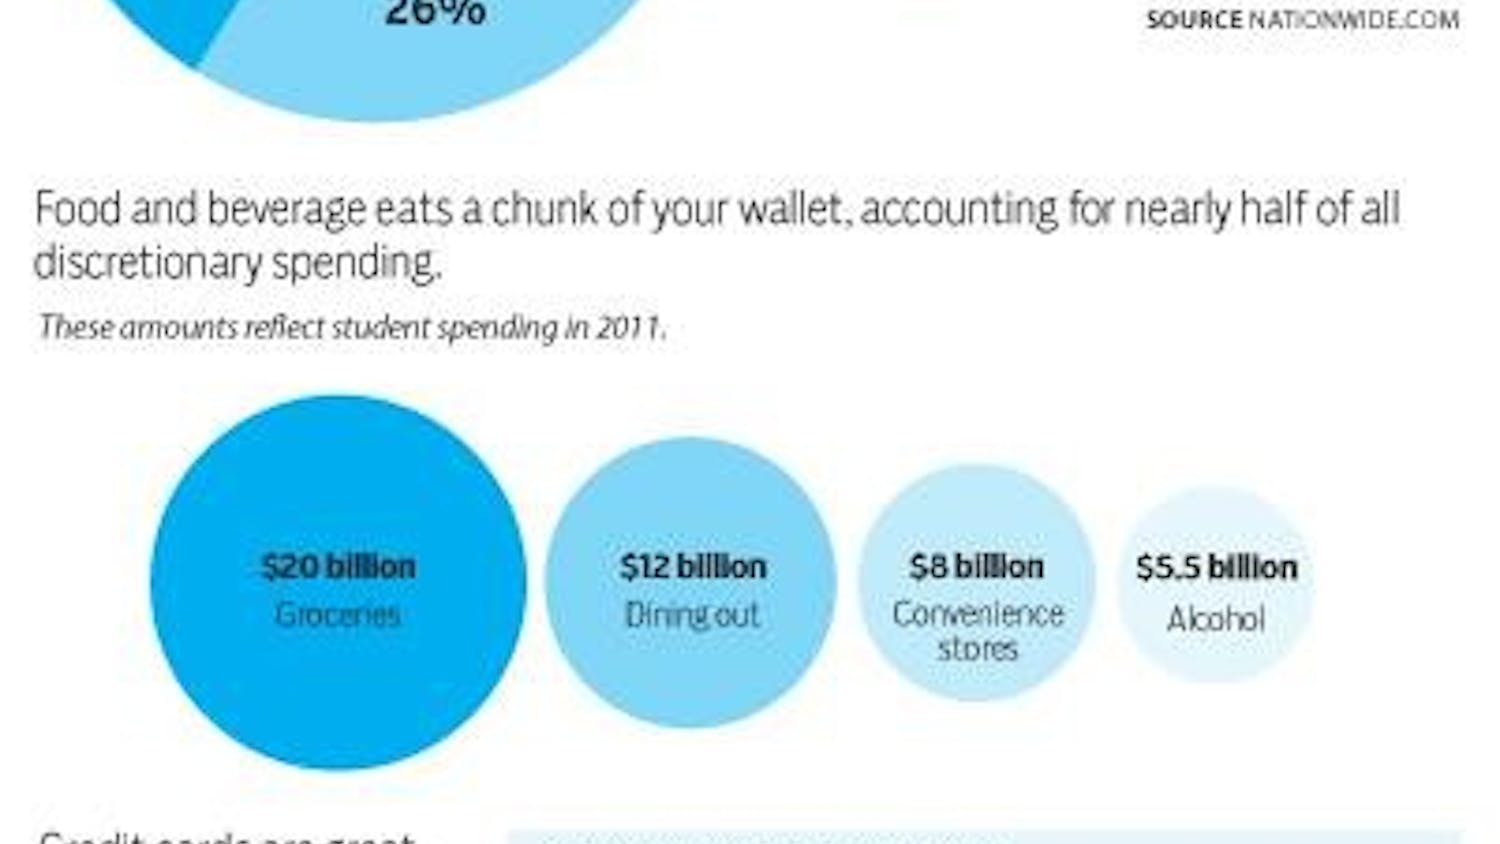 Student spending habits